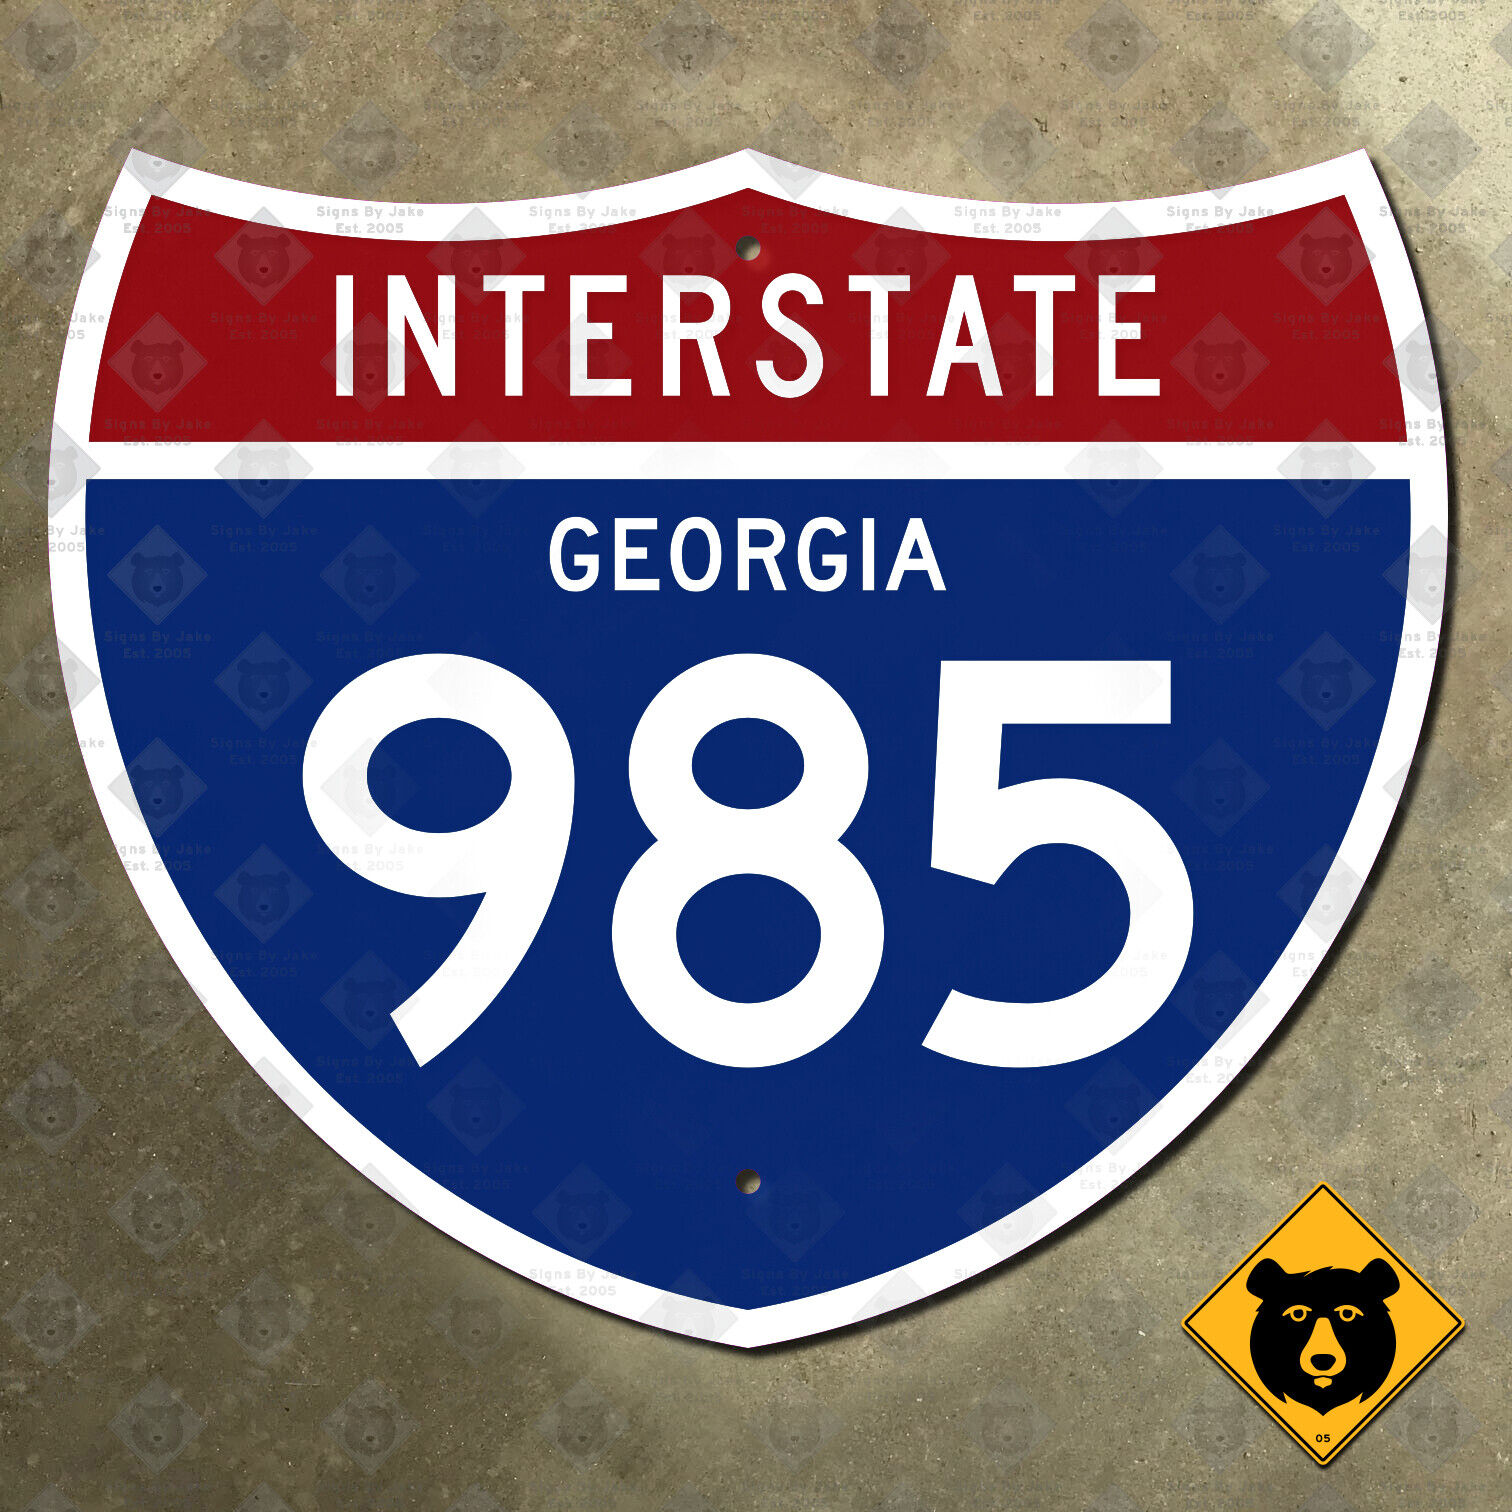 Georgia Interstate 985 route highway road sign Gainesville Suwanee 1961 21x18